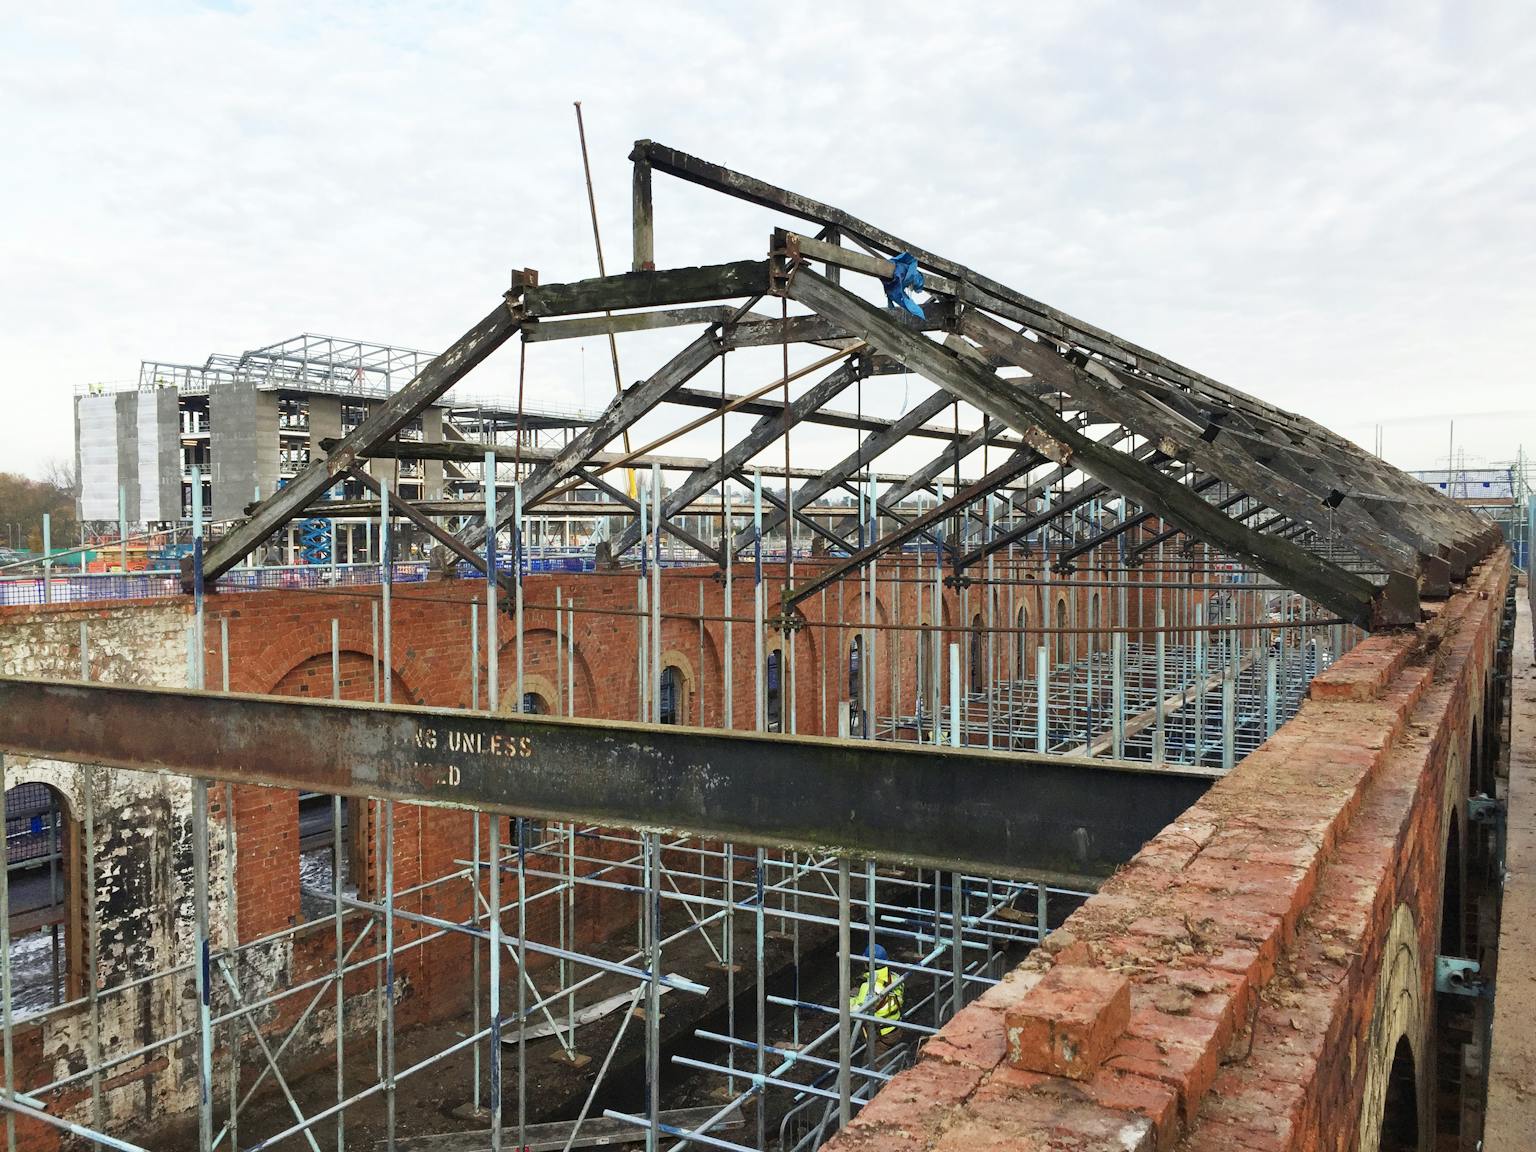 Reinstating the original roof trusses